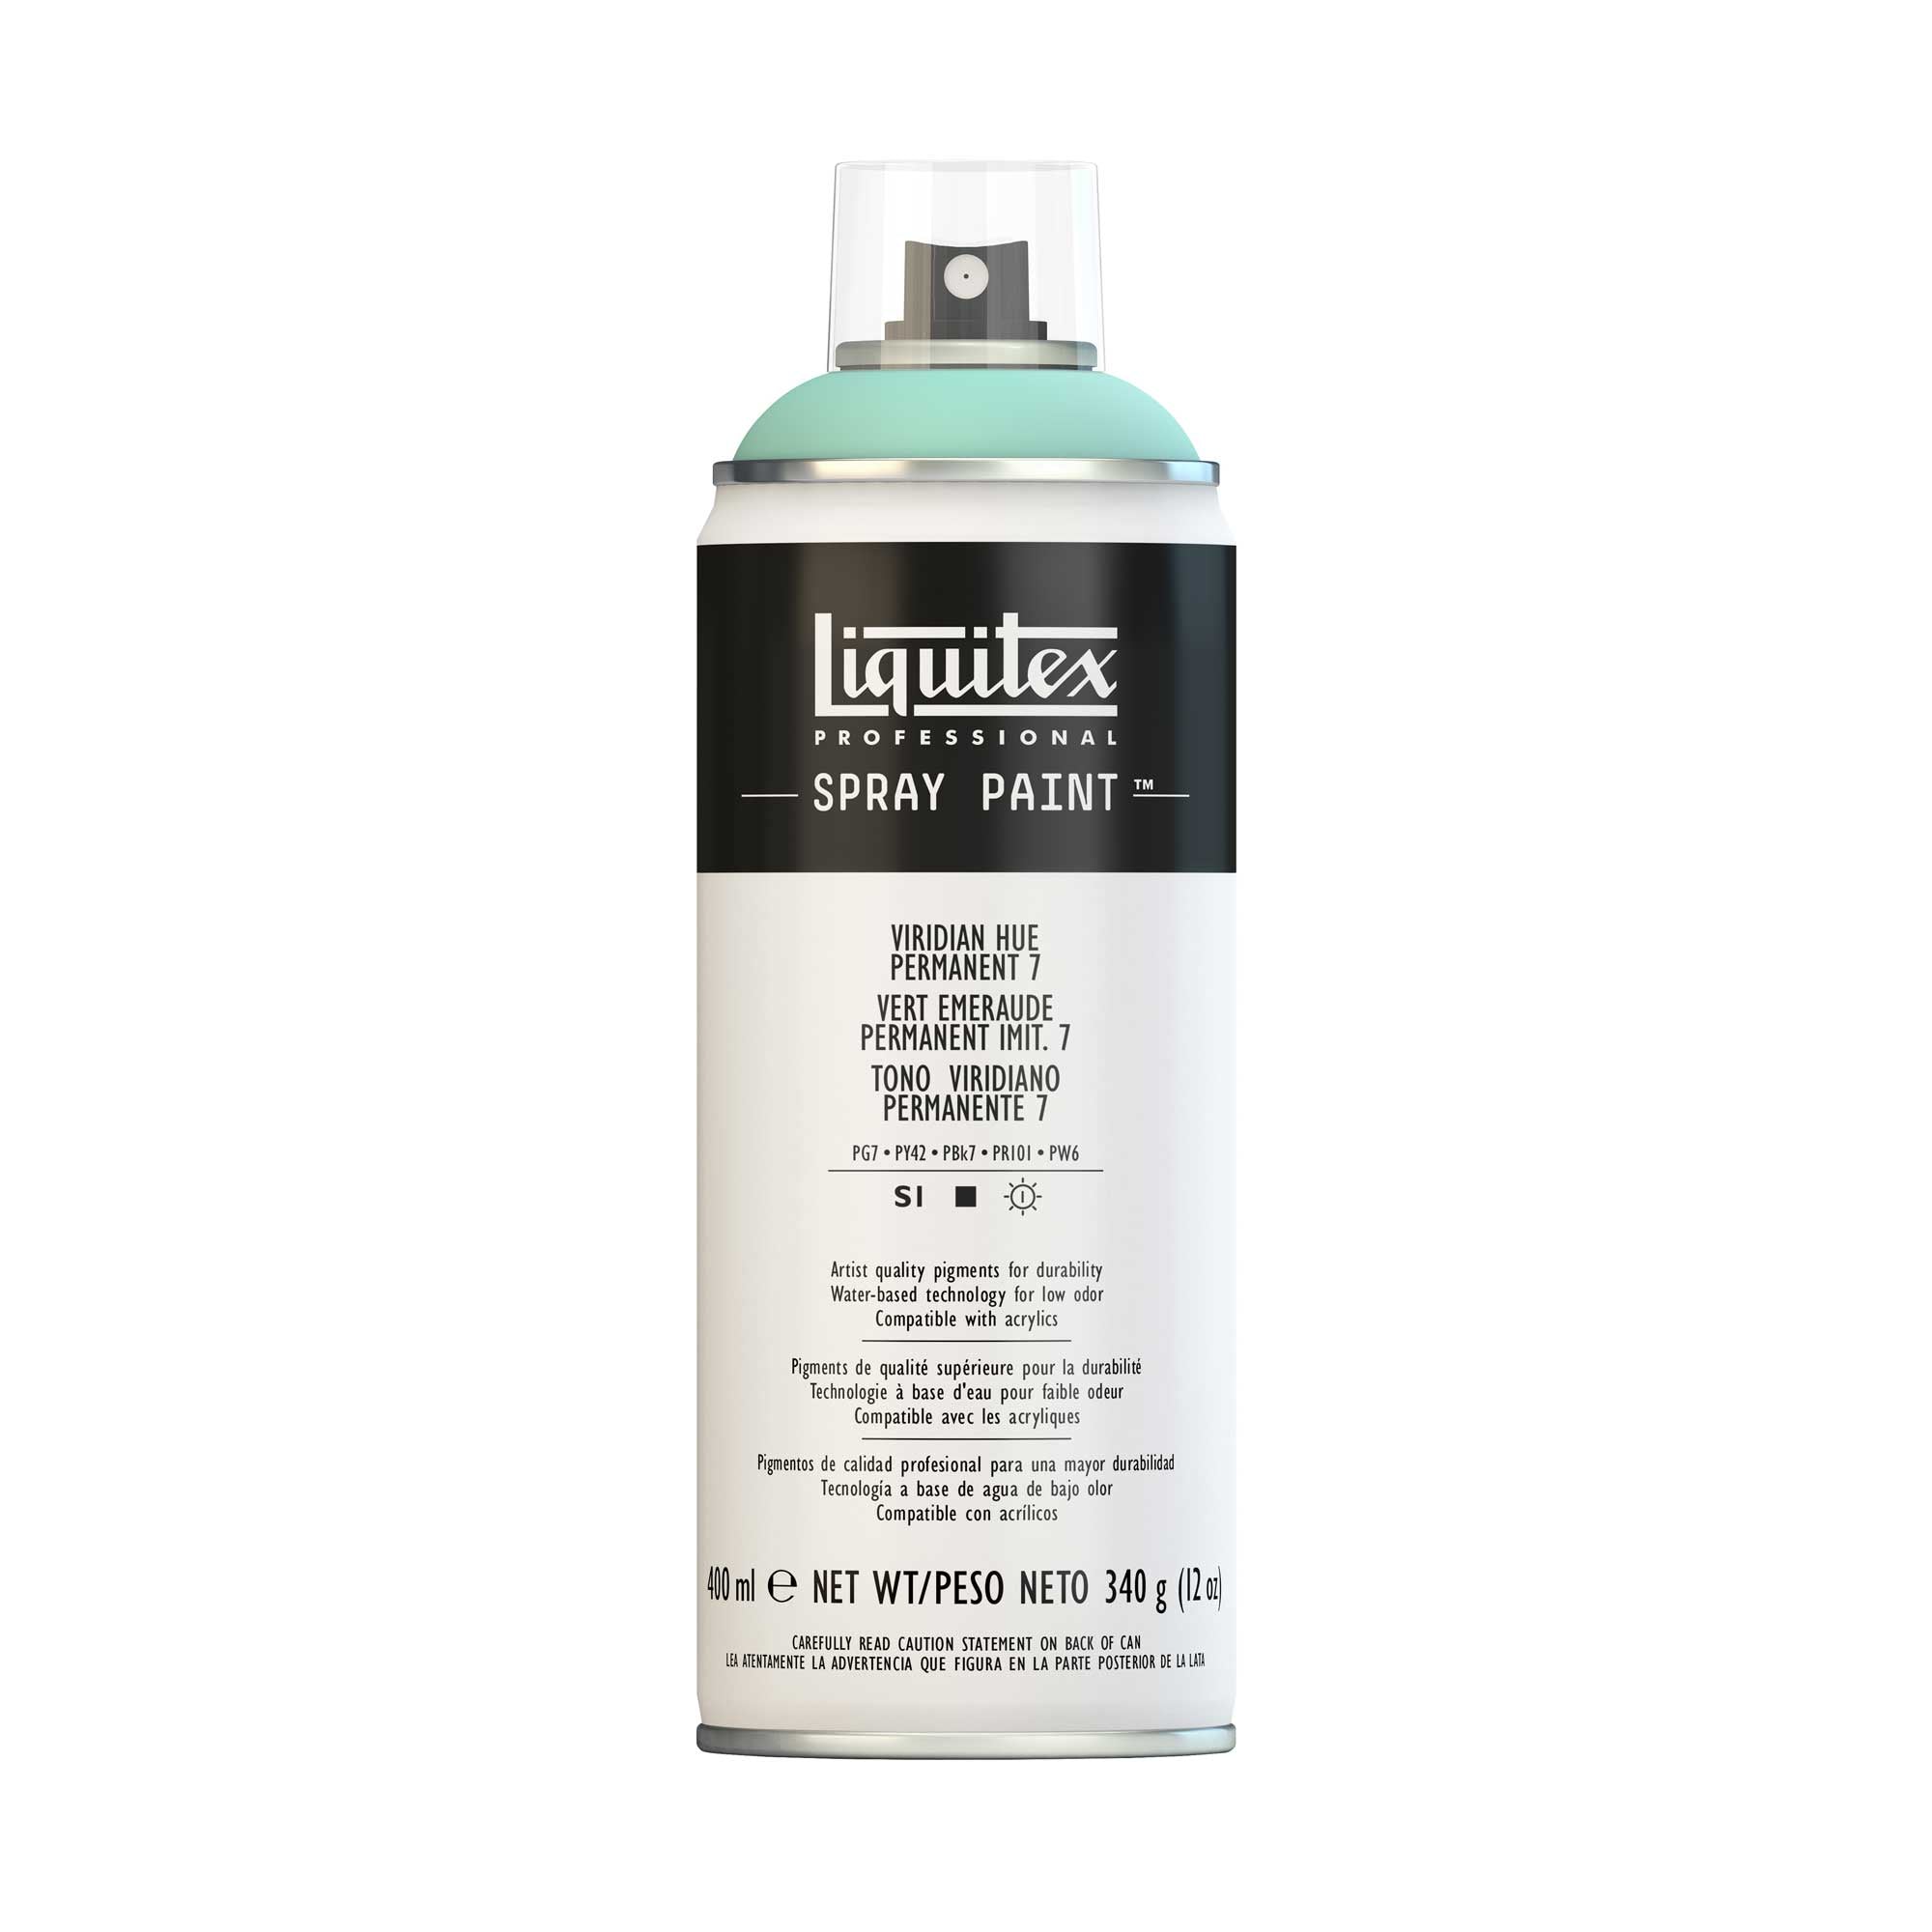 Liquitex Spray Paint 400ml SERIES 1